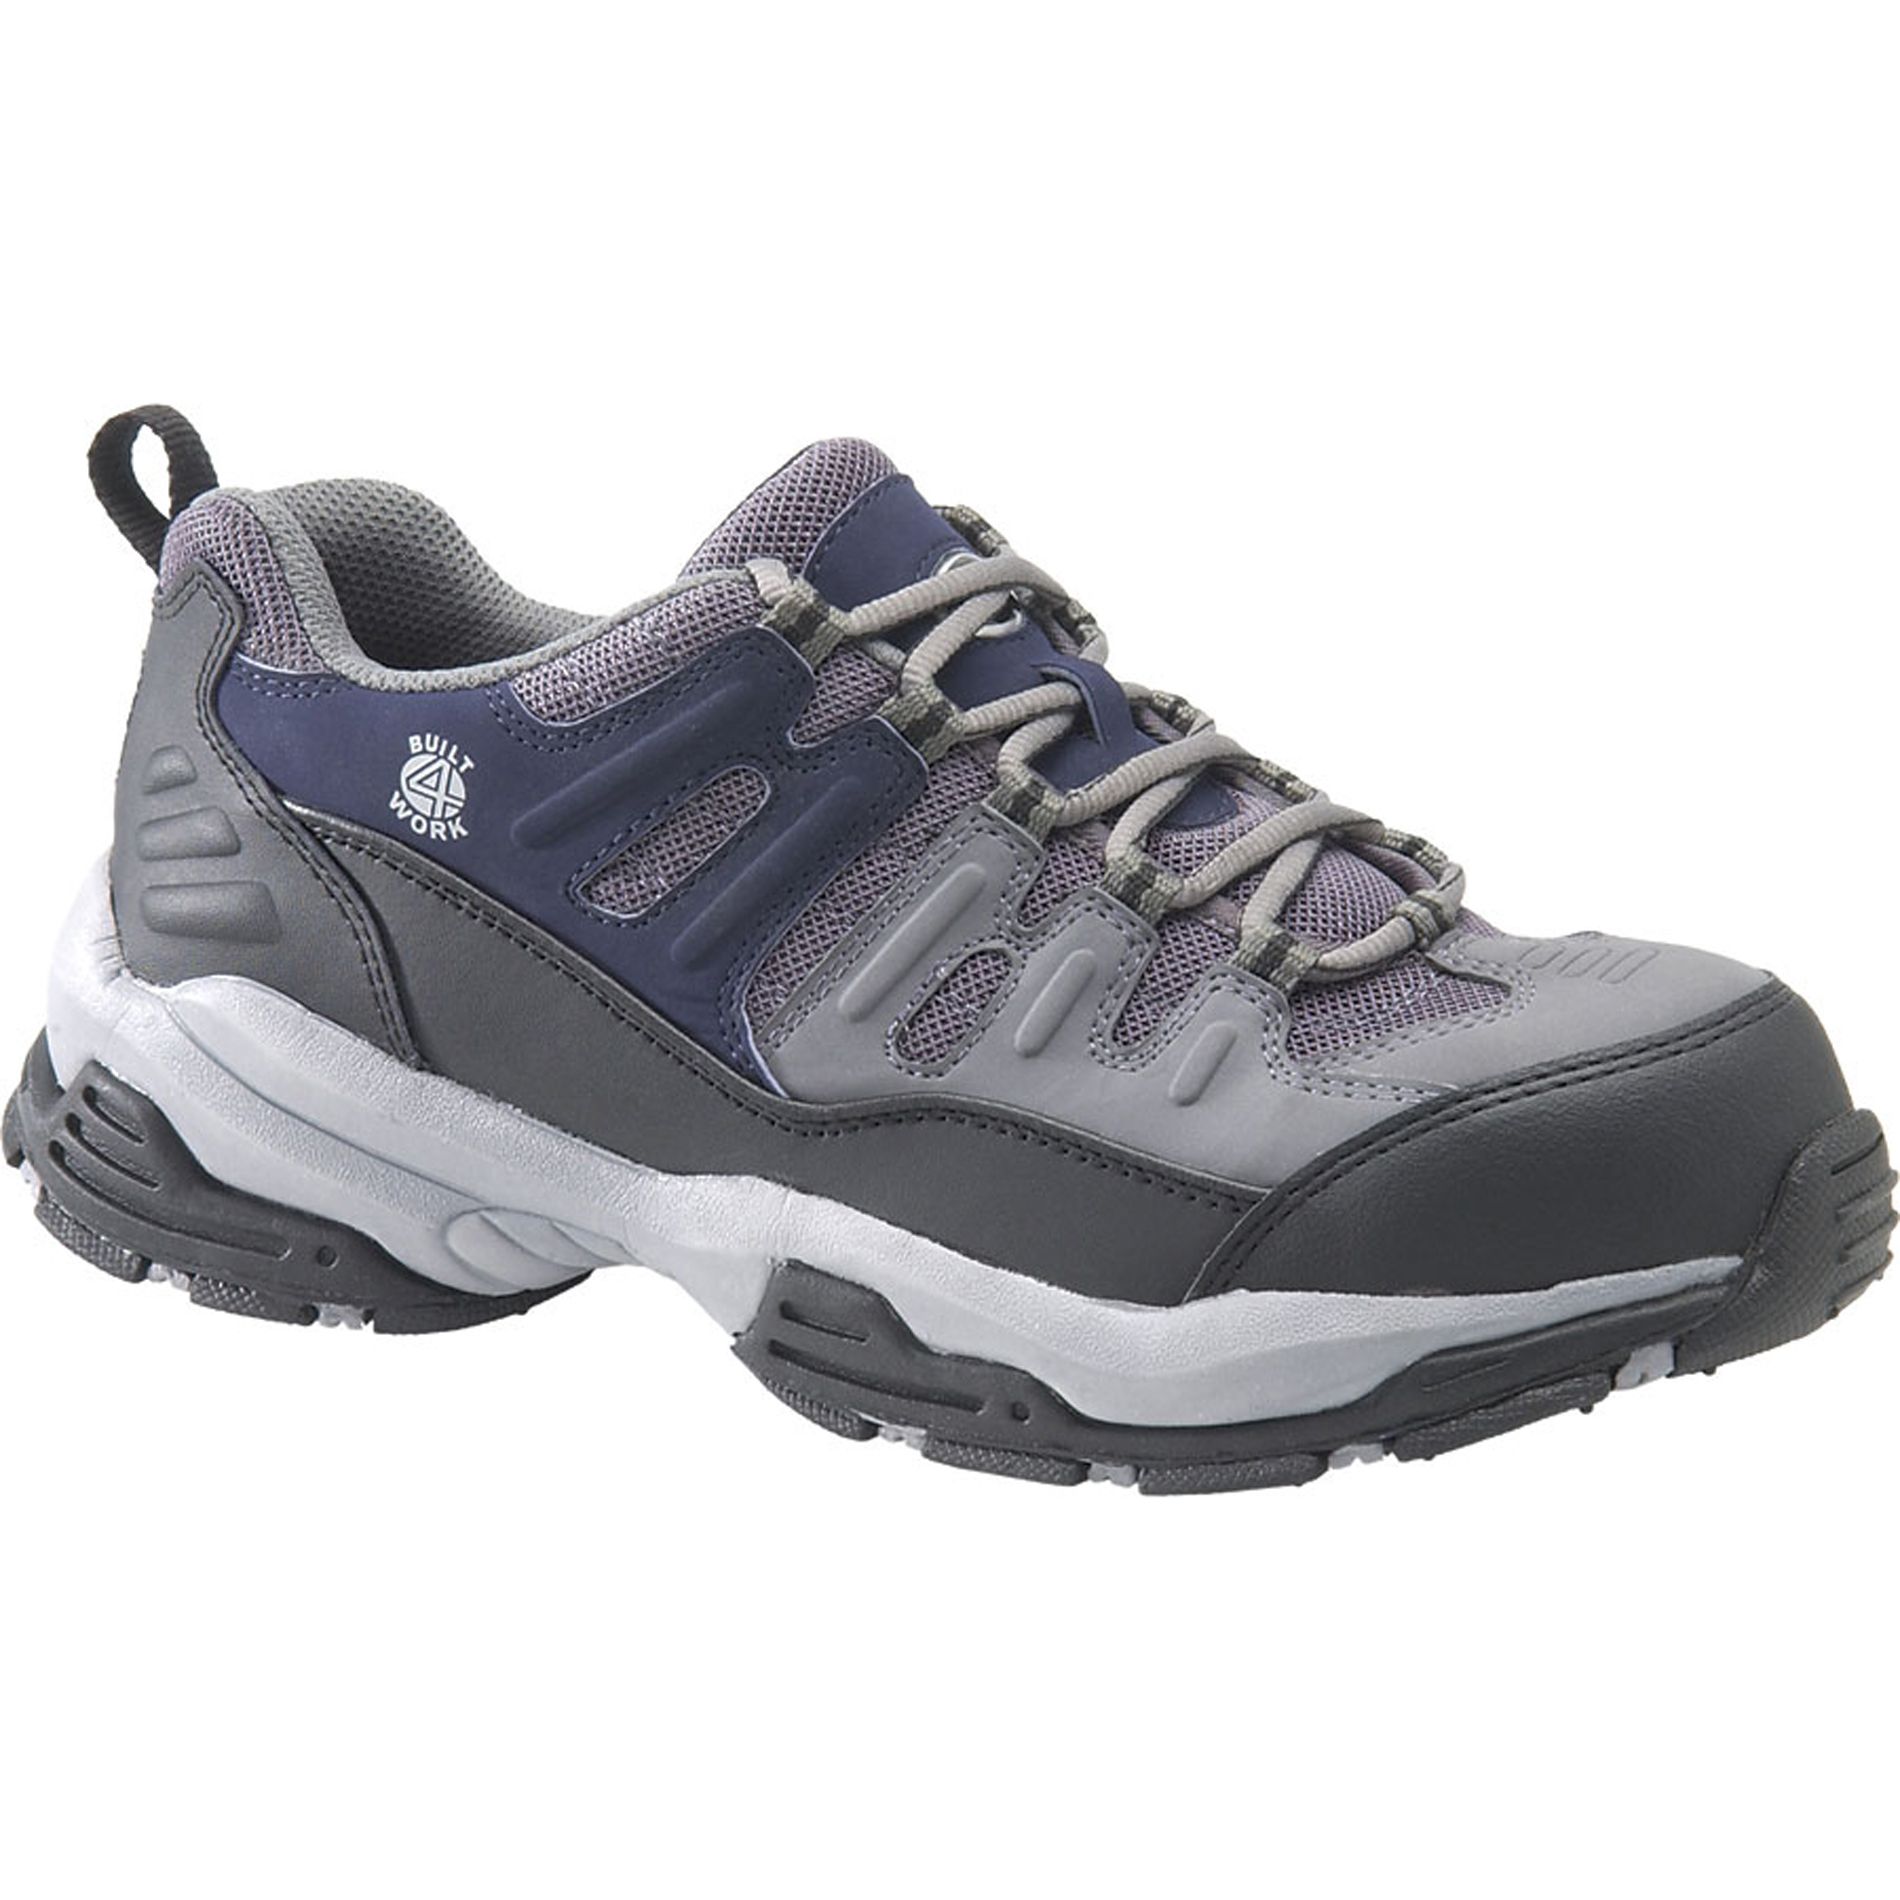 Carolina Shoe Company Men's Steel Toe Athletic Shoe- Dark Gray/Blue